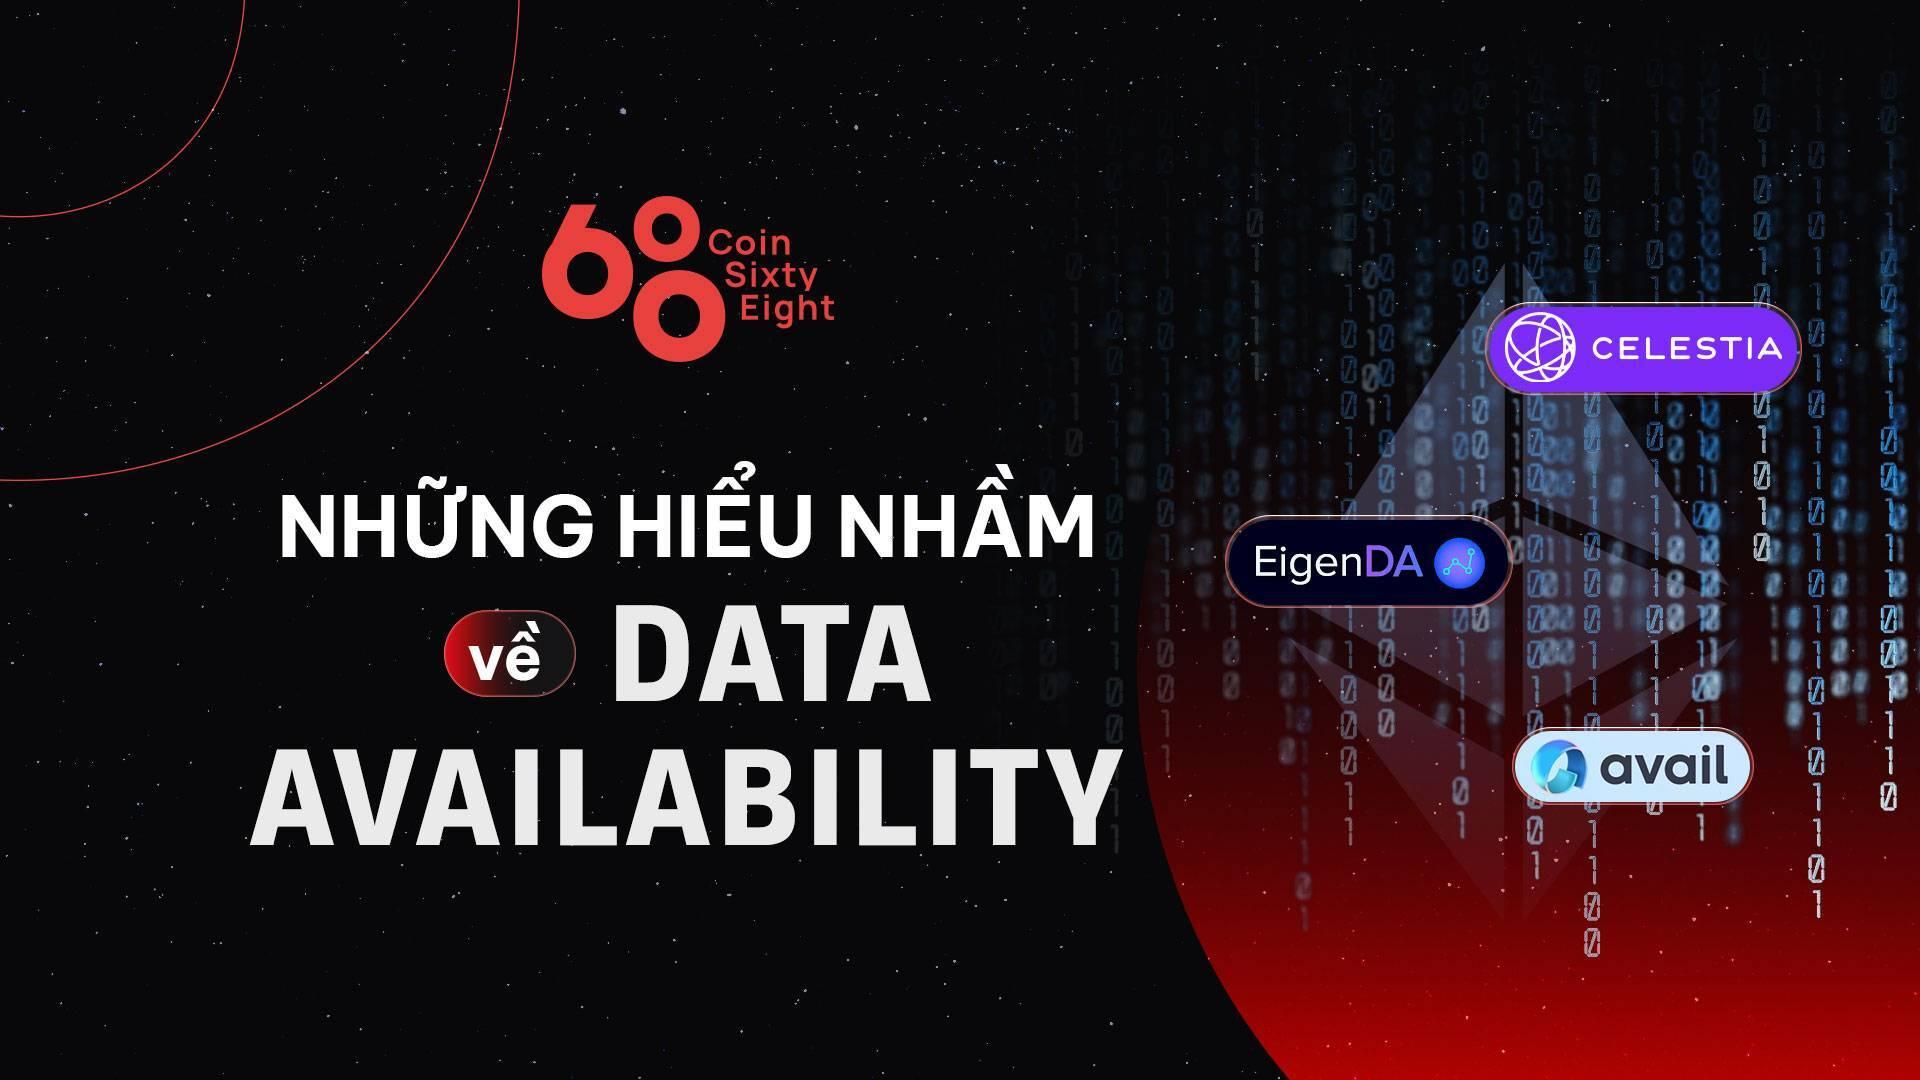 nhung-hieu-nham-ve-data-availability-rut-ra-sau-1-nam